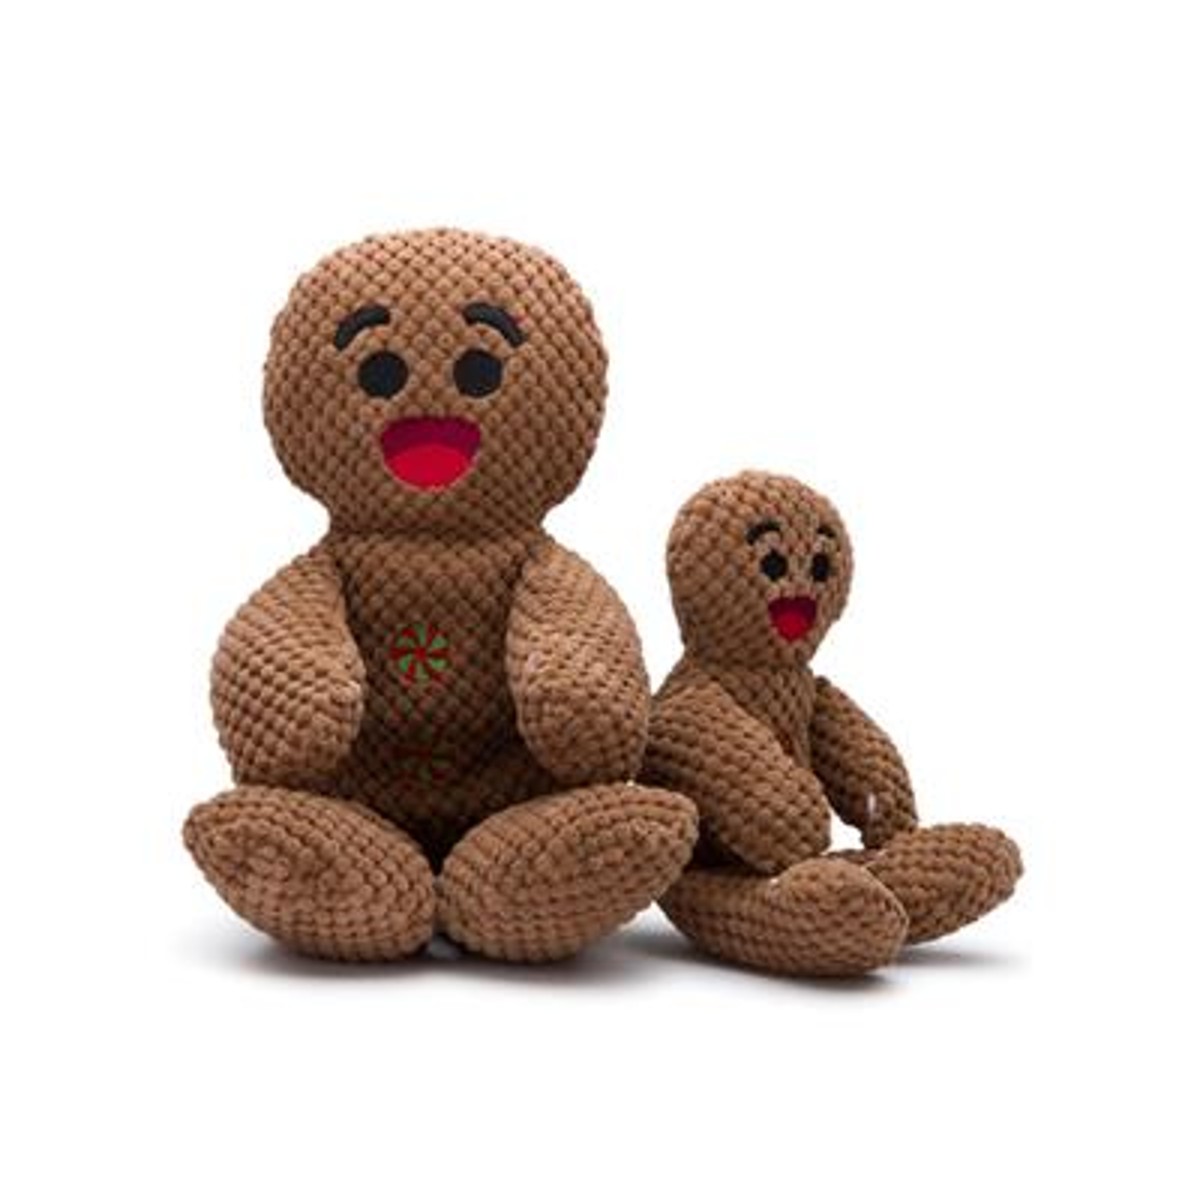 fabdog® Holiday Floppy Friends Dog Toy - Gingerbread